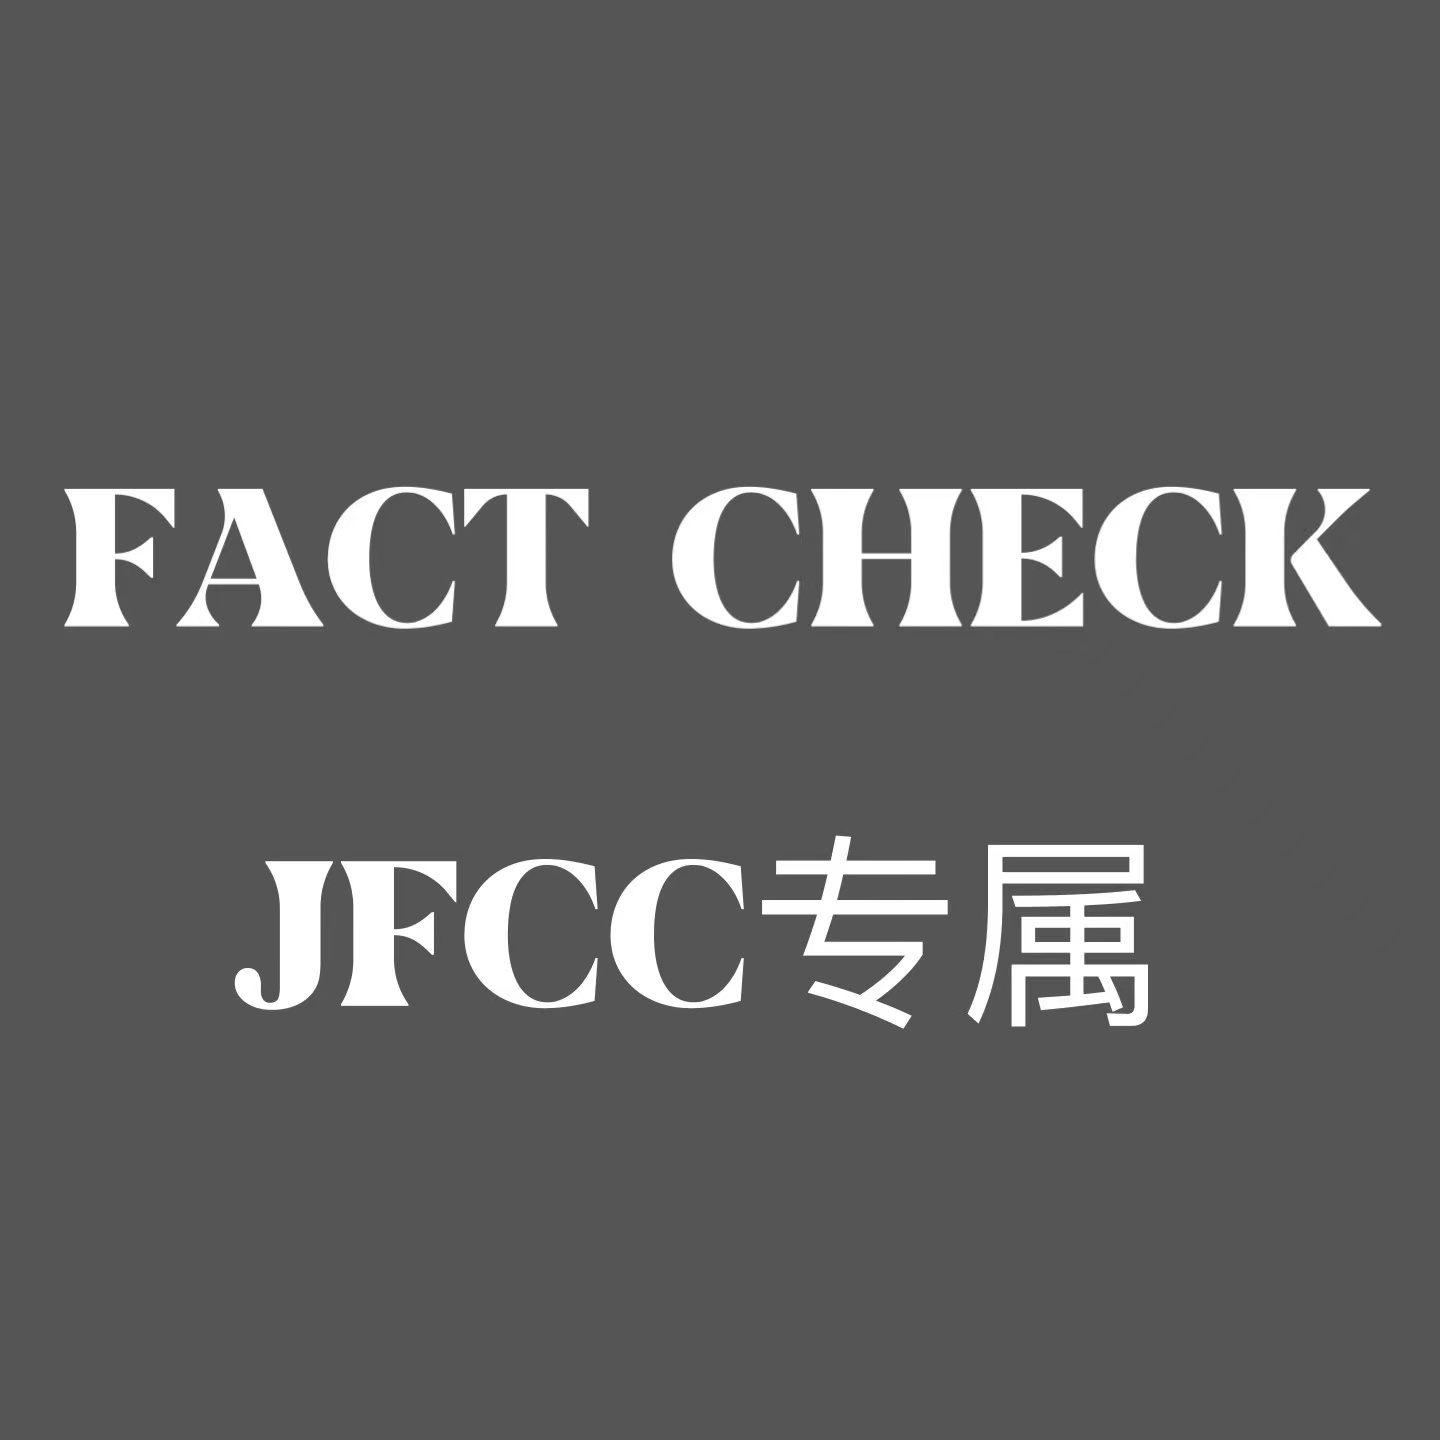 【九站联合】 [全款 裸专] NCT 127 - The 5th Album [Fact Check] (Exhibit Ver.) (Random Ver.) _徐英浩吧_JohnnyBar